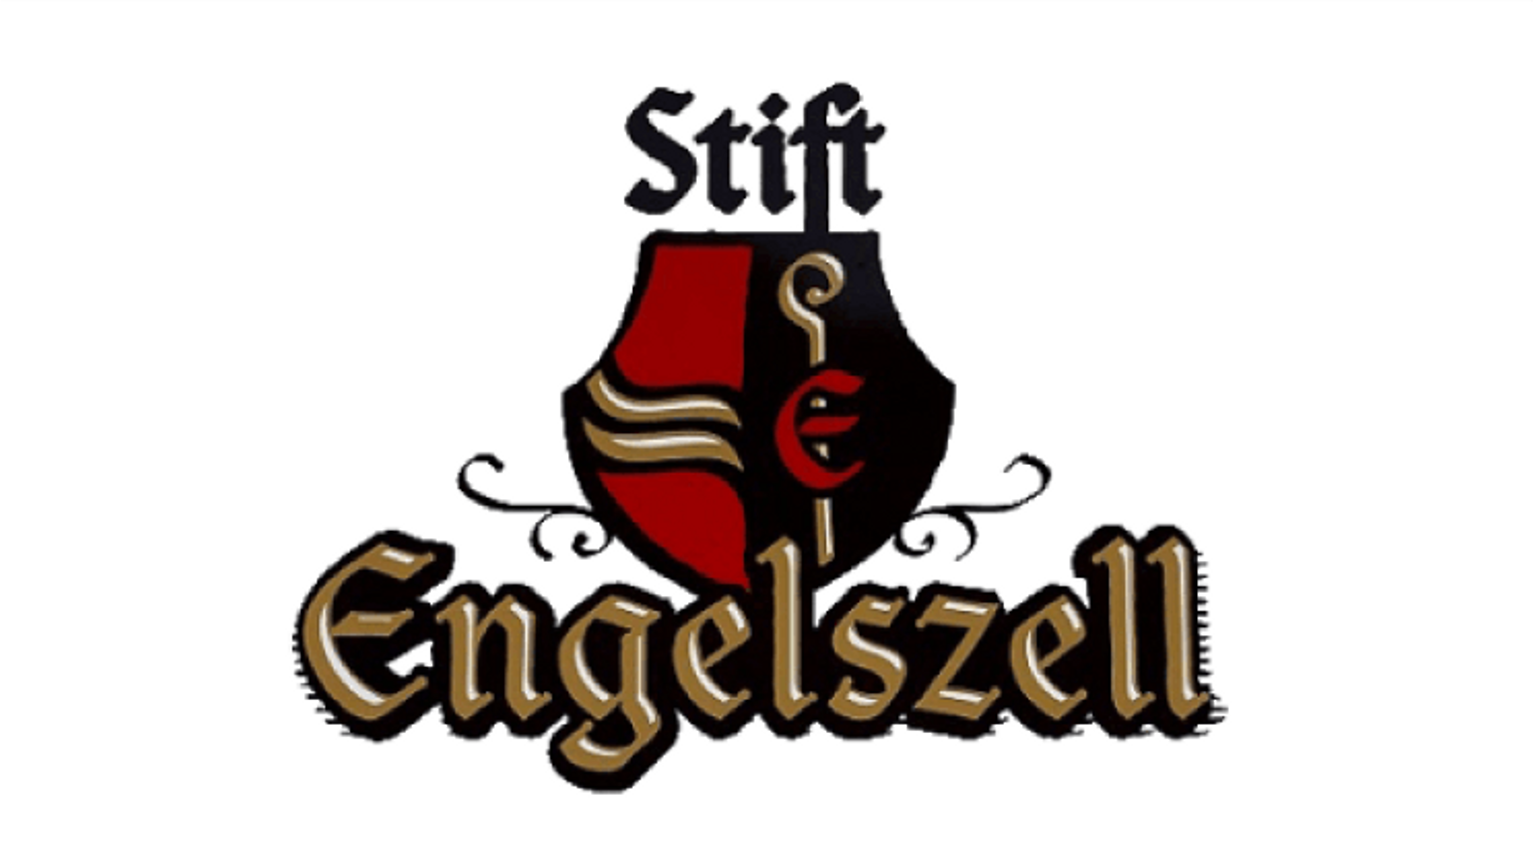 thumbnail for blog article named: L’abbazia di Engelszell e la sua birra Trappista austriaca